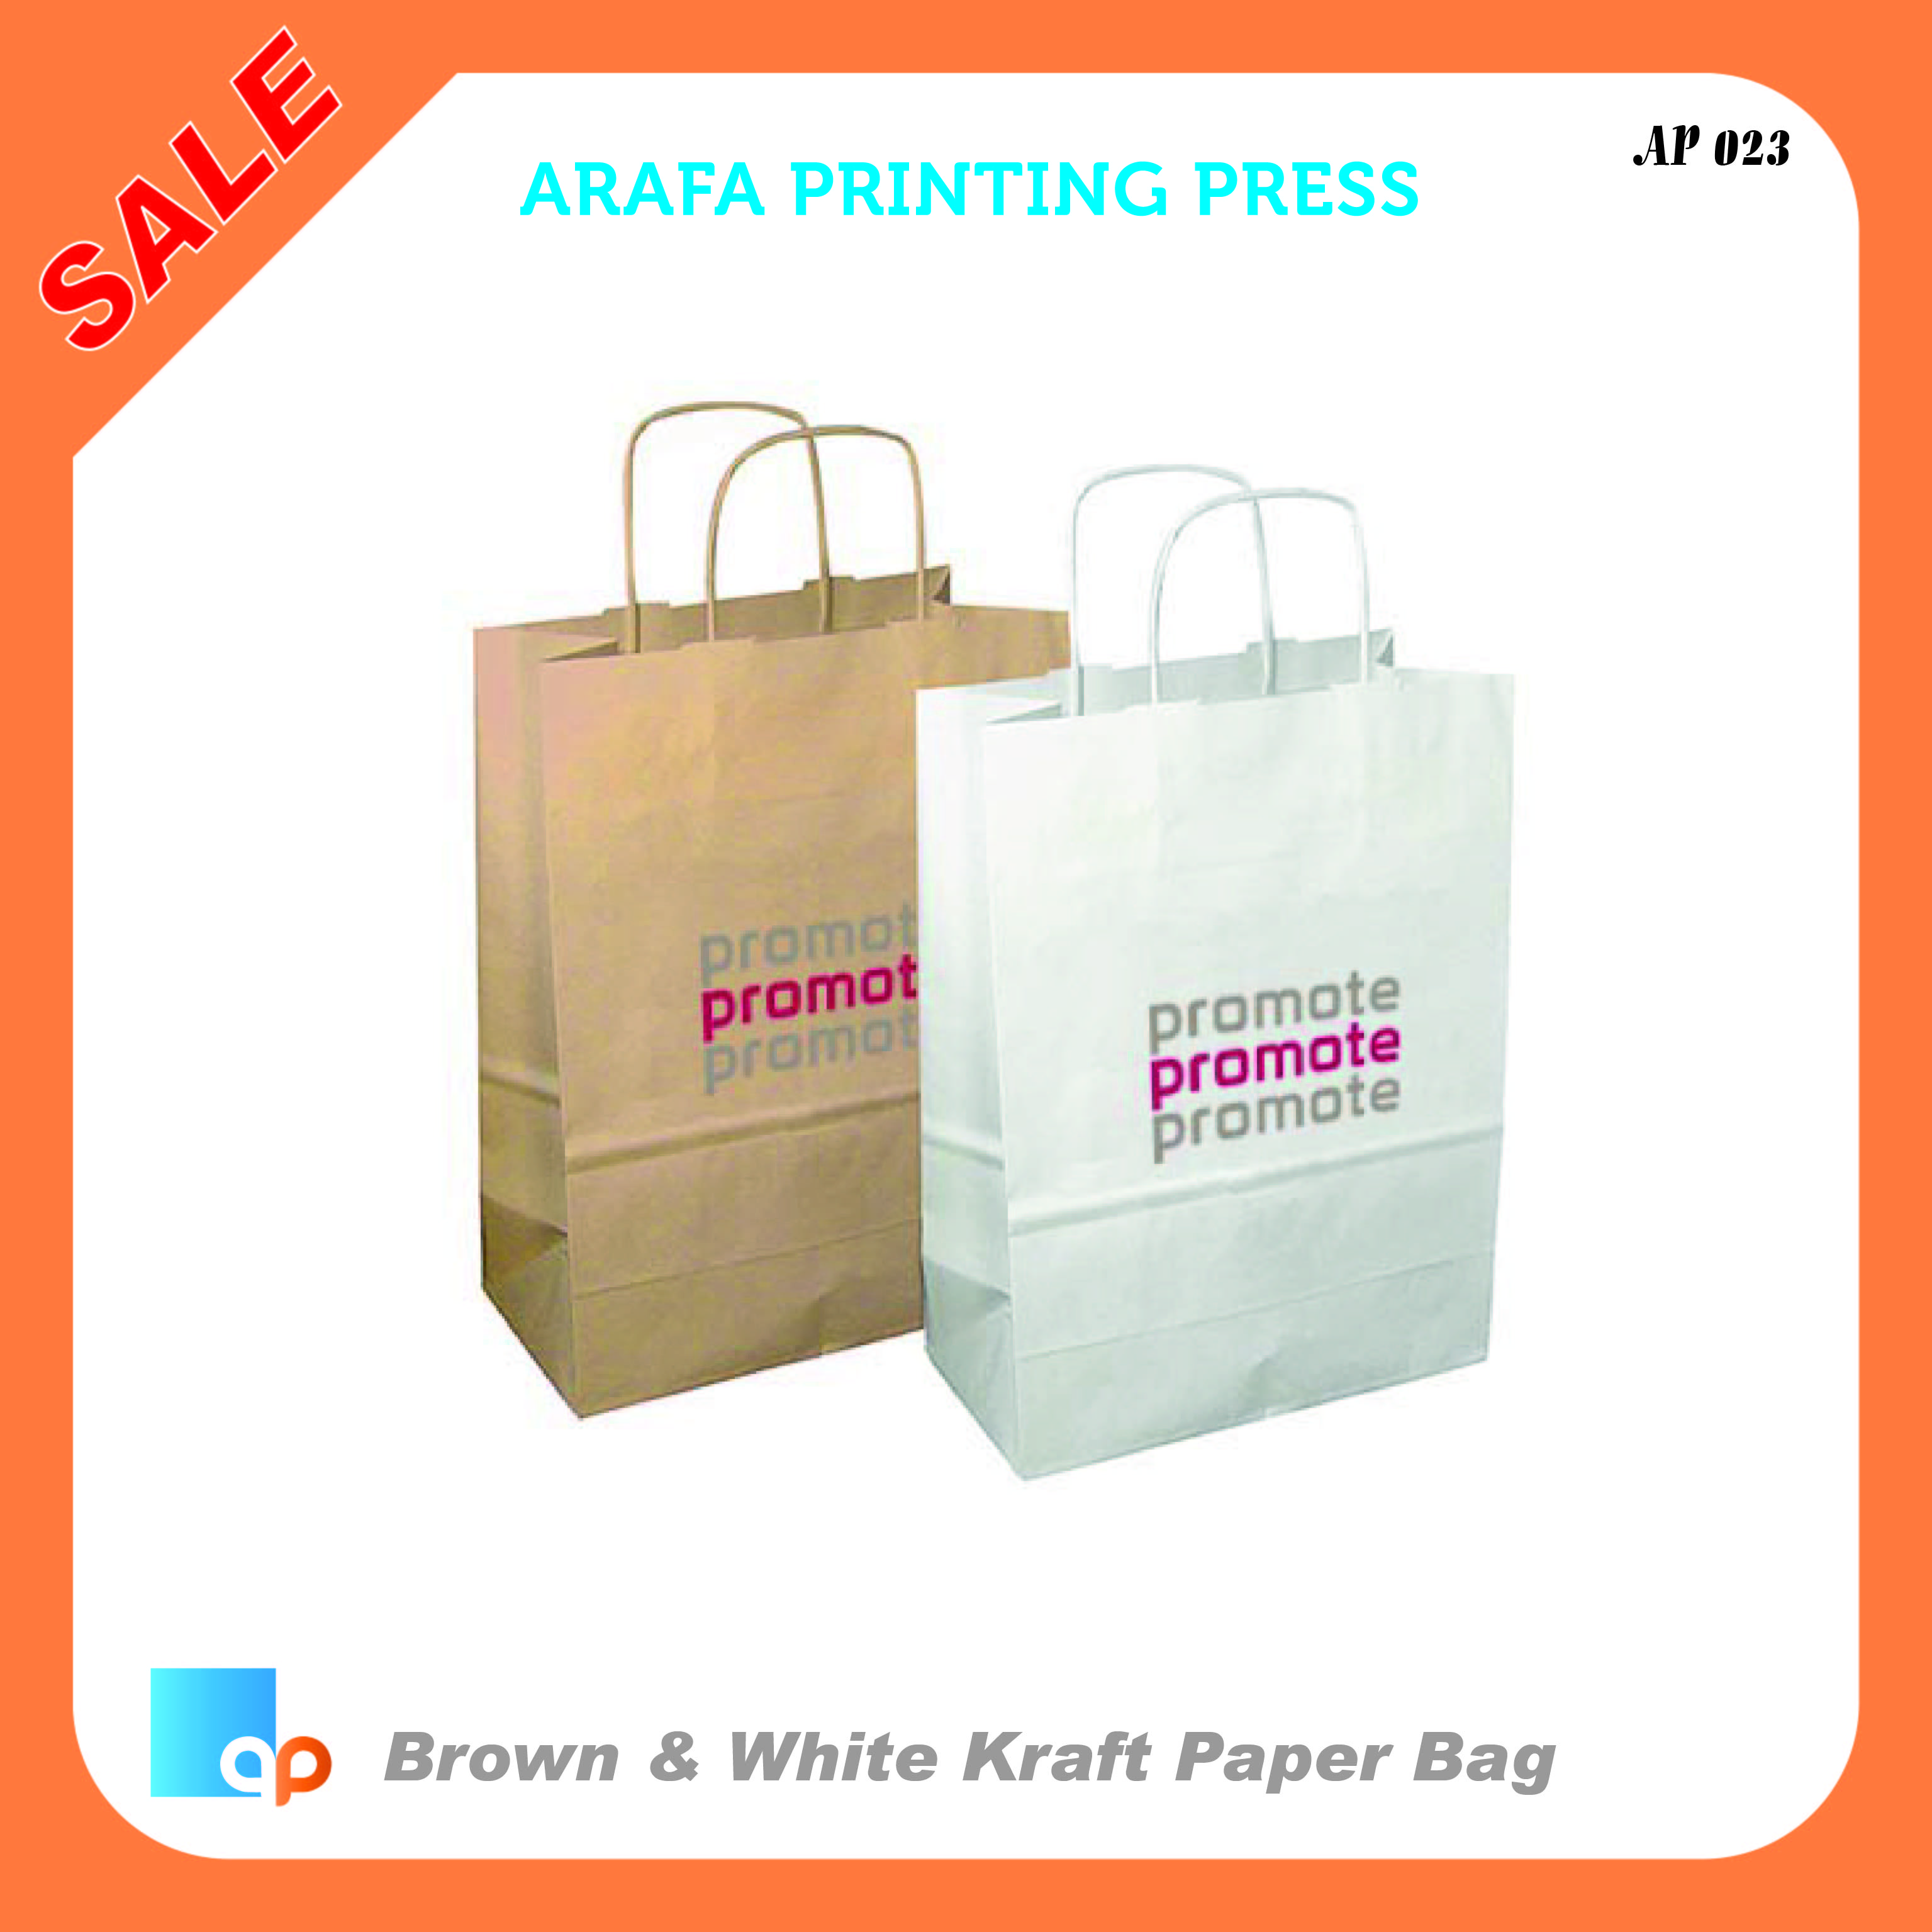 Shopping bag printing in Dubai